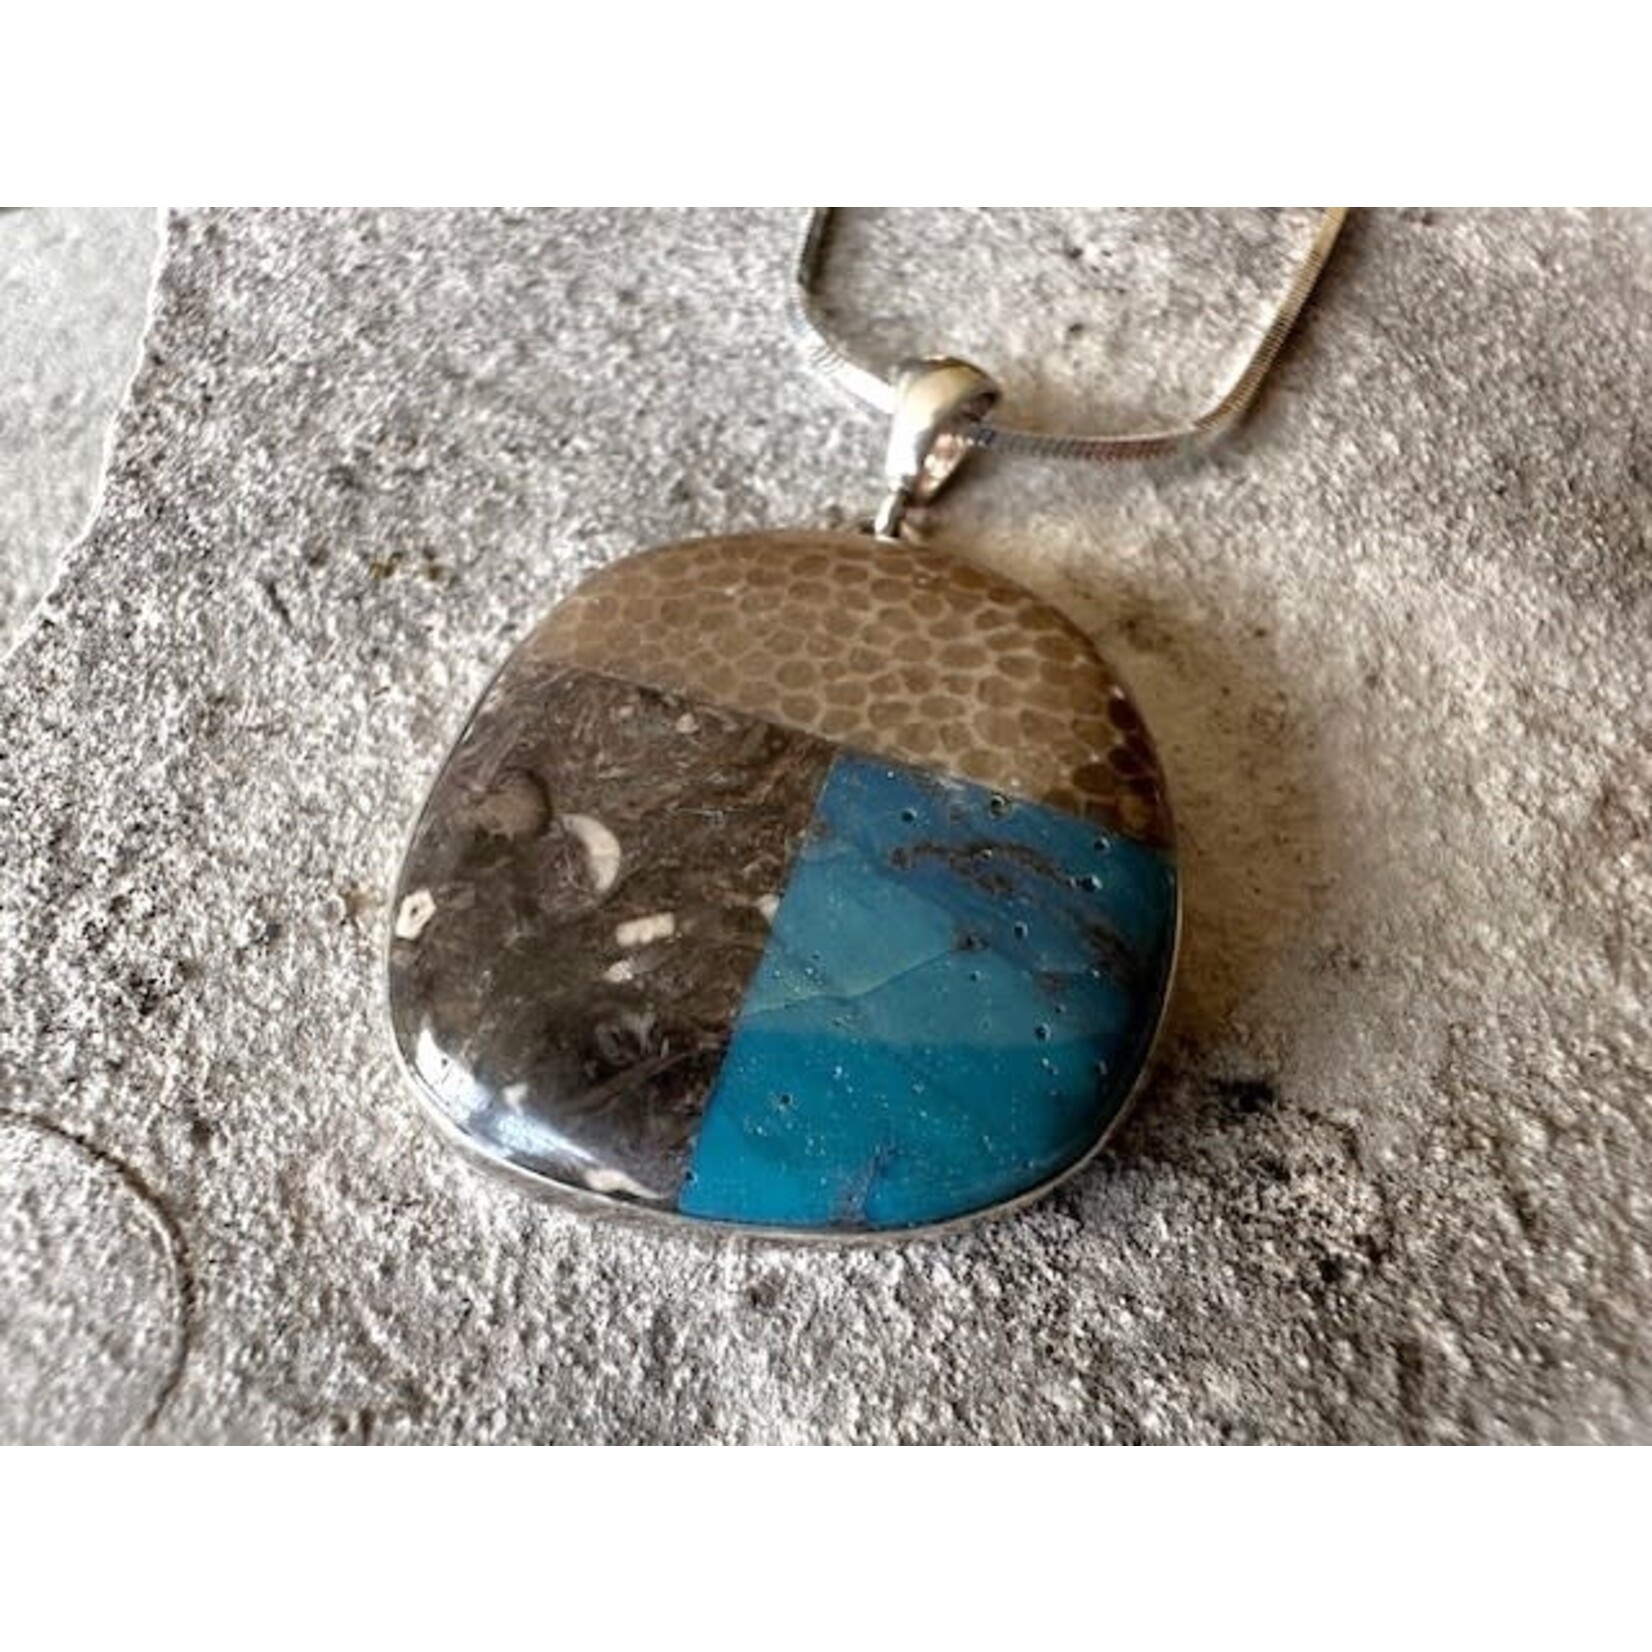 Necklace Pendant - Michigan Stone Trio - Leland Blue, Charlevoix, & Fossil Soup Stone